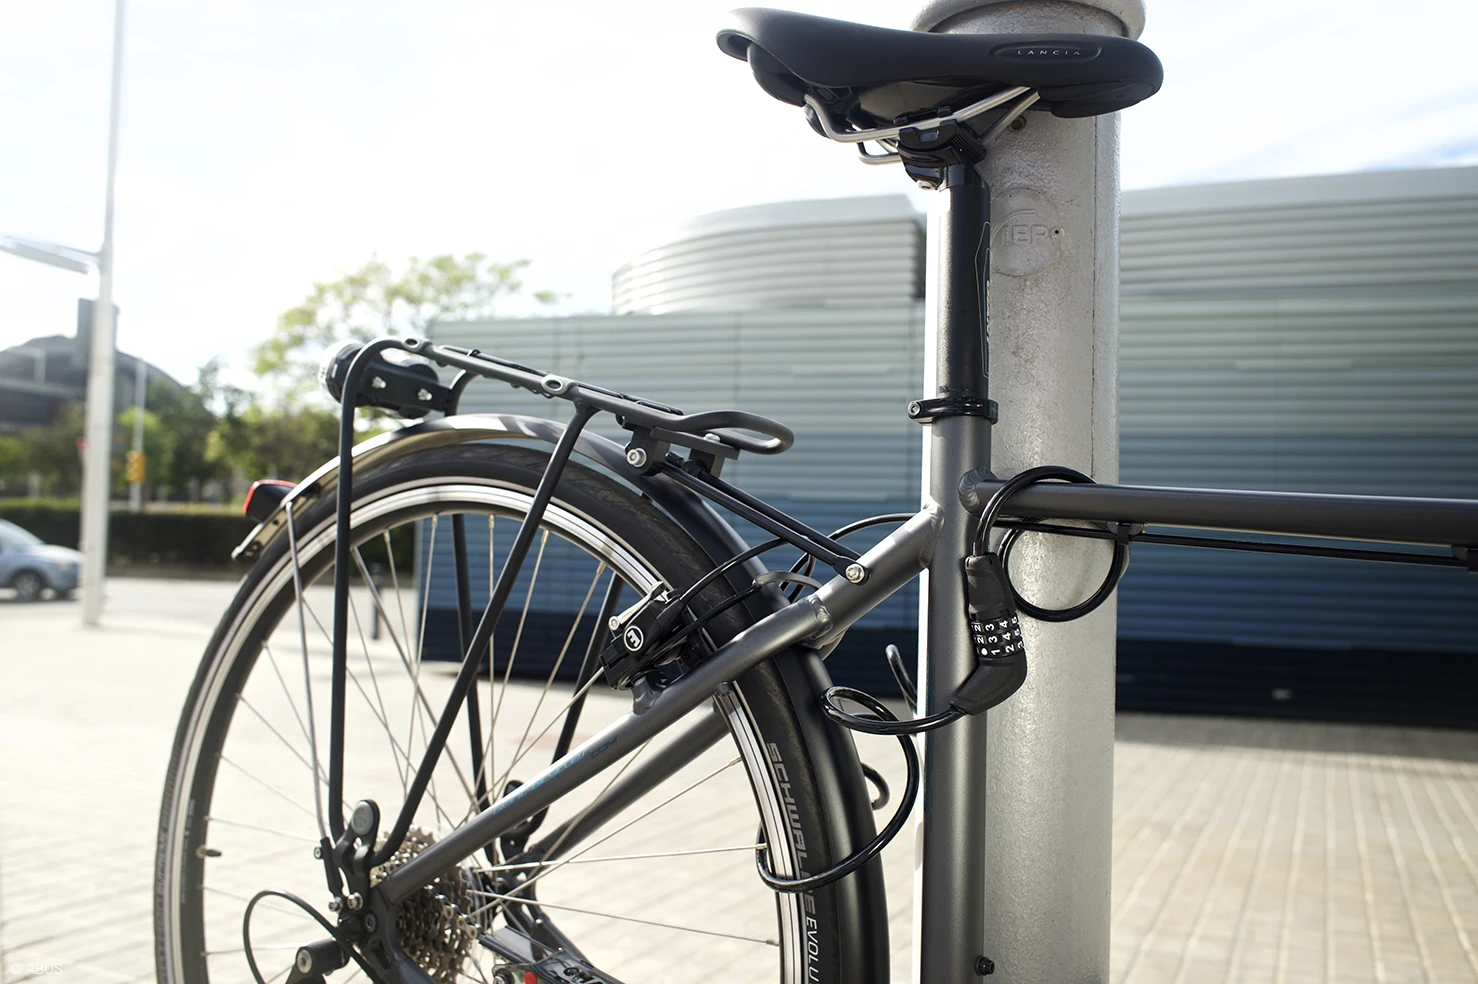 Câble antivol pour vélo - Câble de Verrouillage de vélo